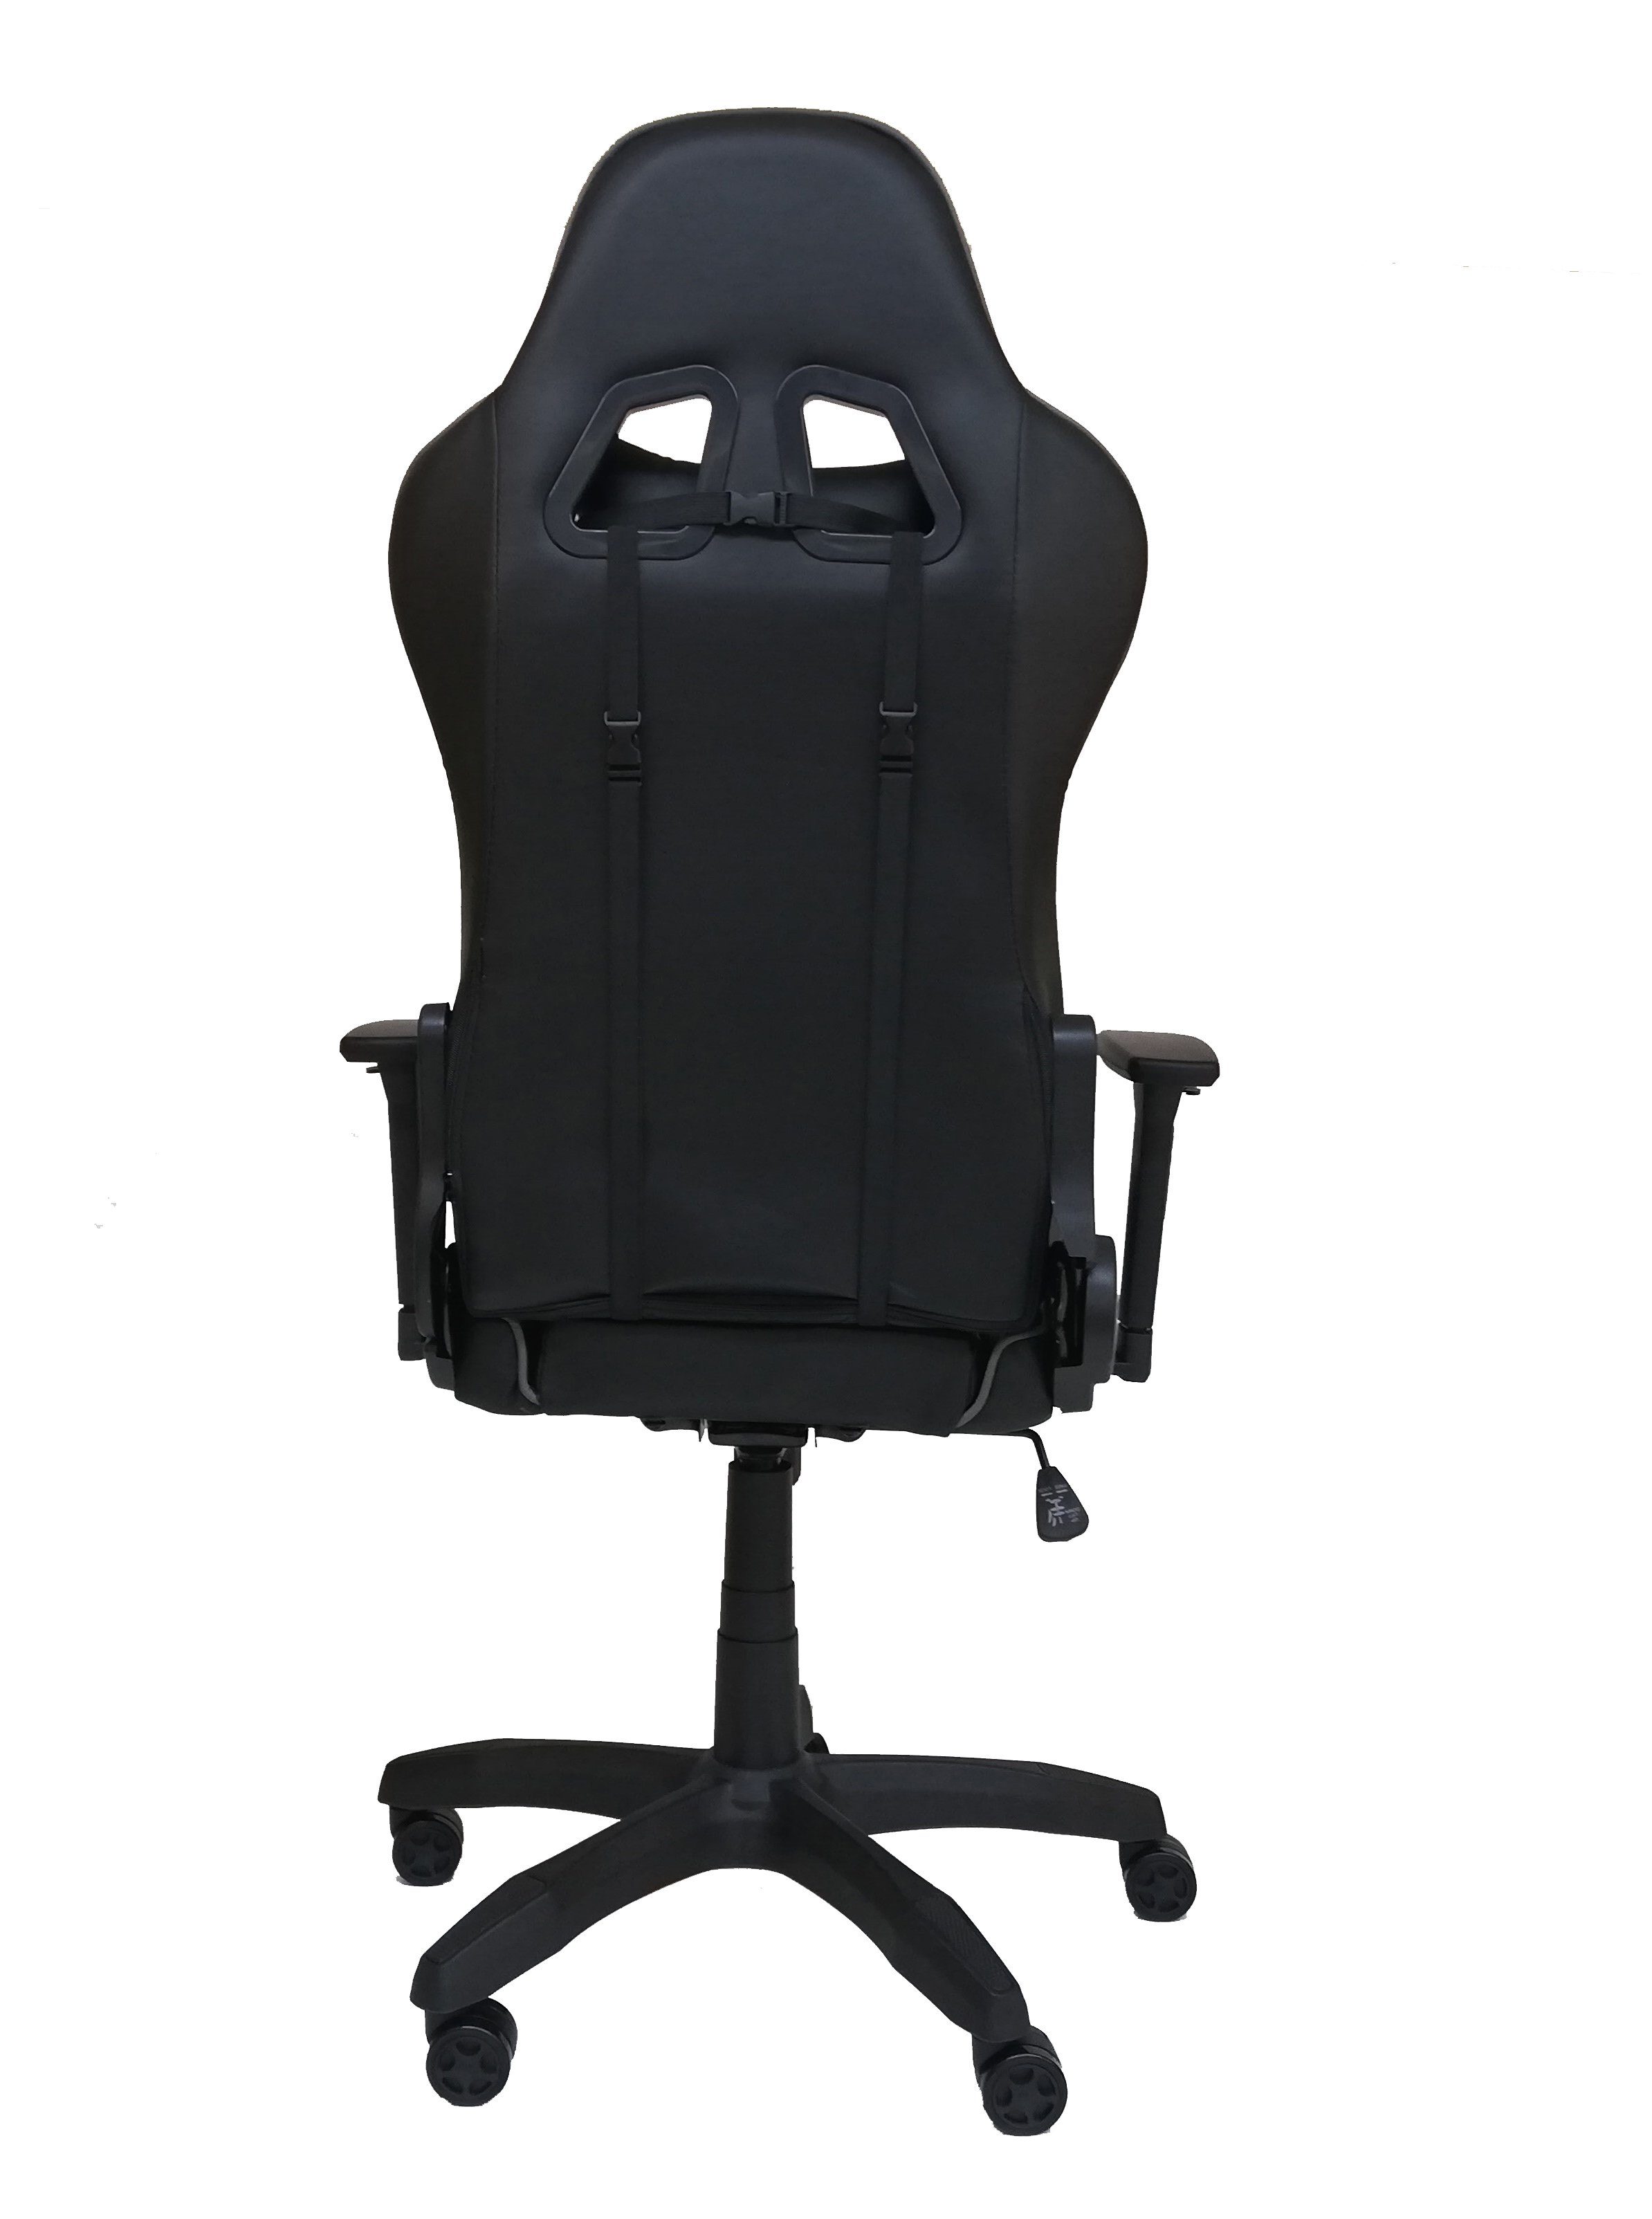 Hyrican Gaming-Stuhl Striker Gaming-Stuhl 3D-Armlehnen "Comander" Gamingstuhl, ergonomischer